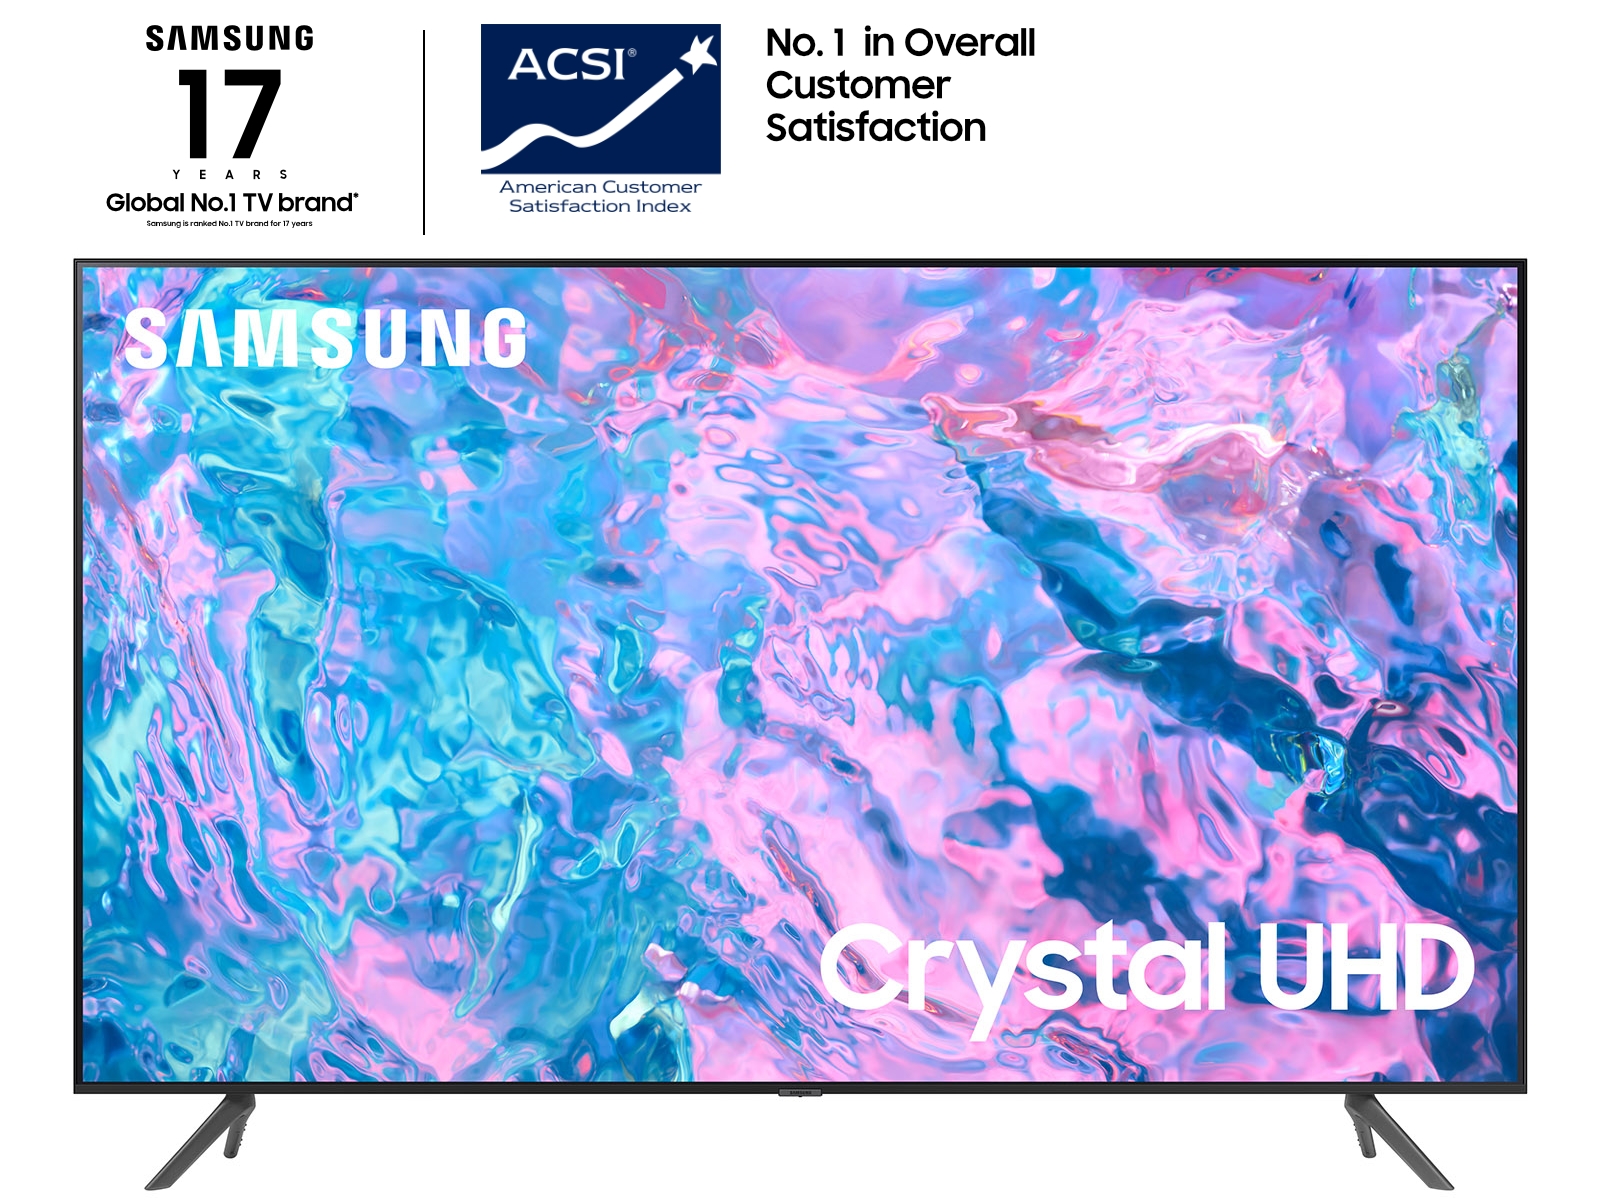 70" Class CU7000 Crystal UHD 4K Smart TV TVs - UN70CU7000FXZA Samsung US